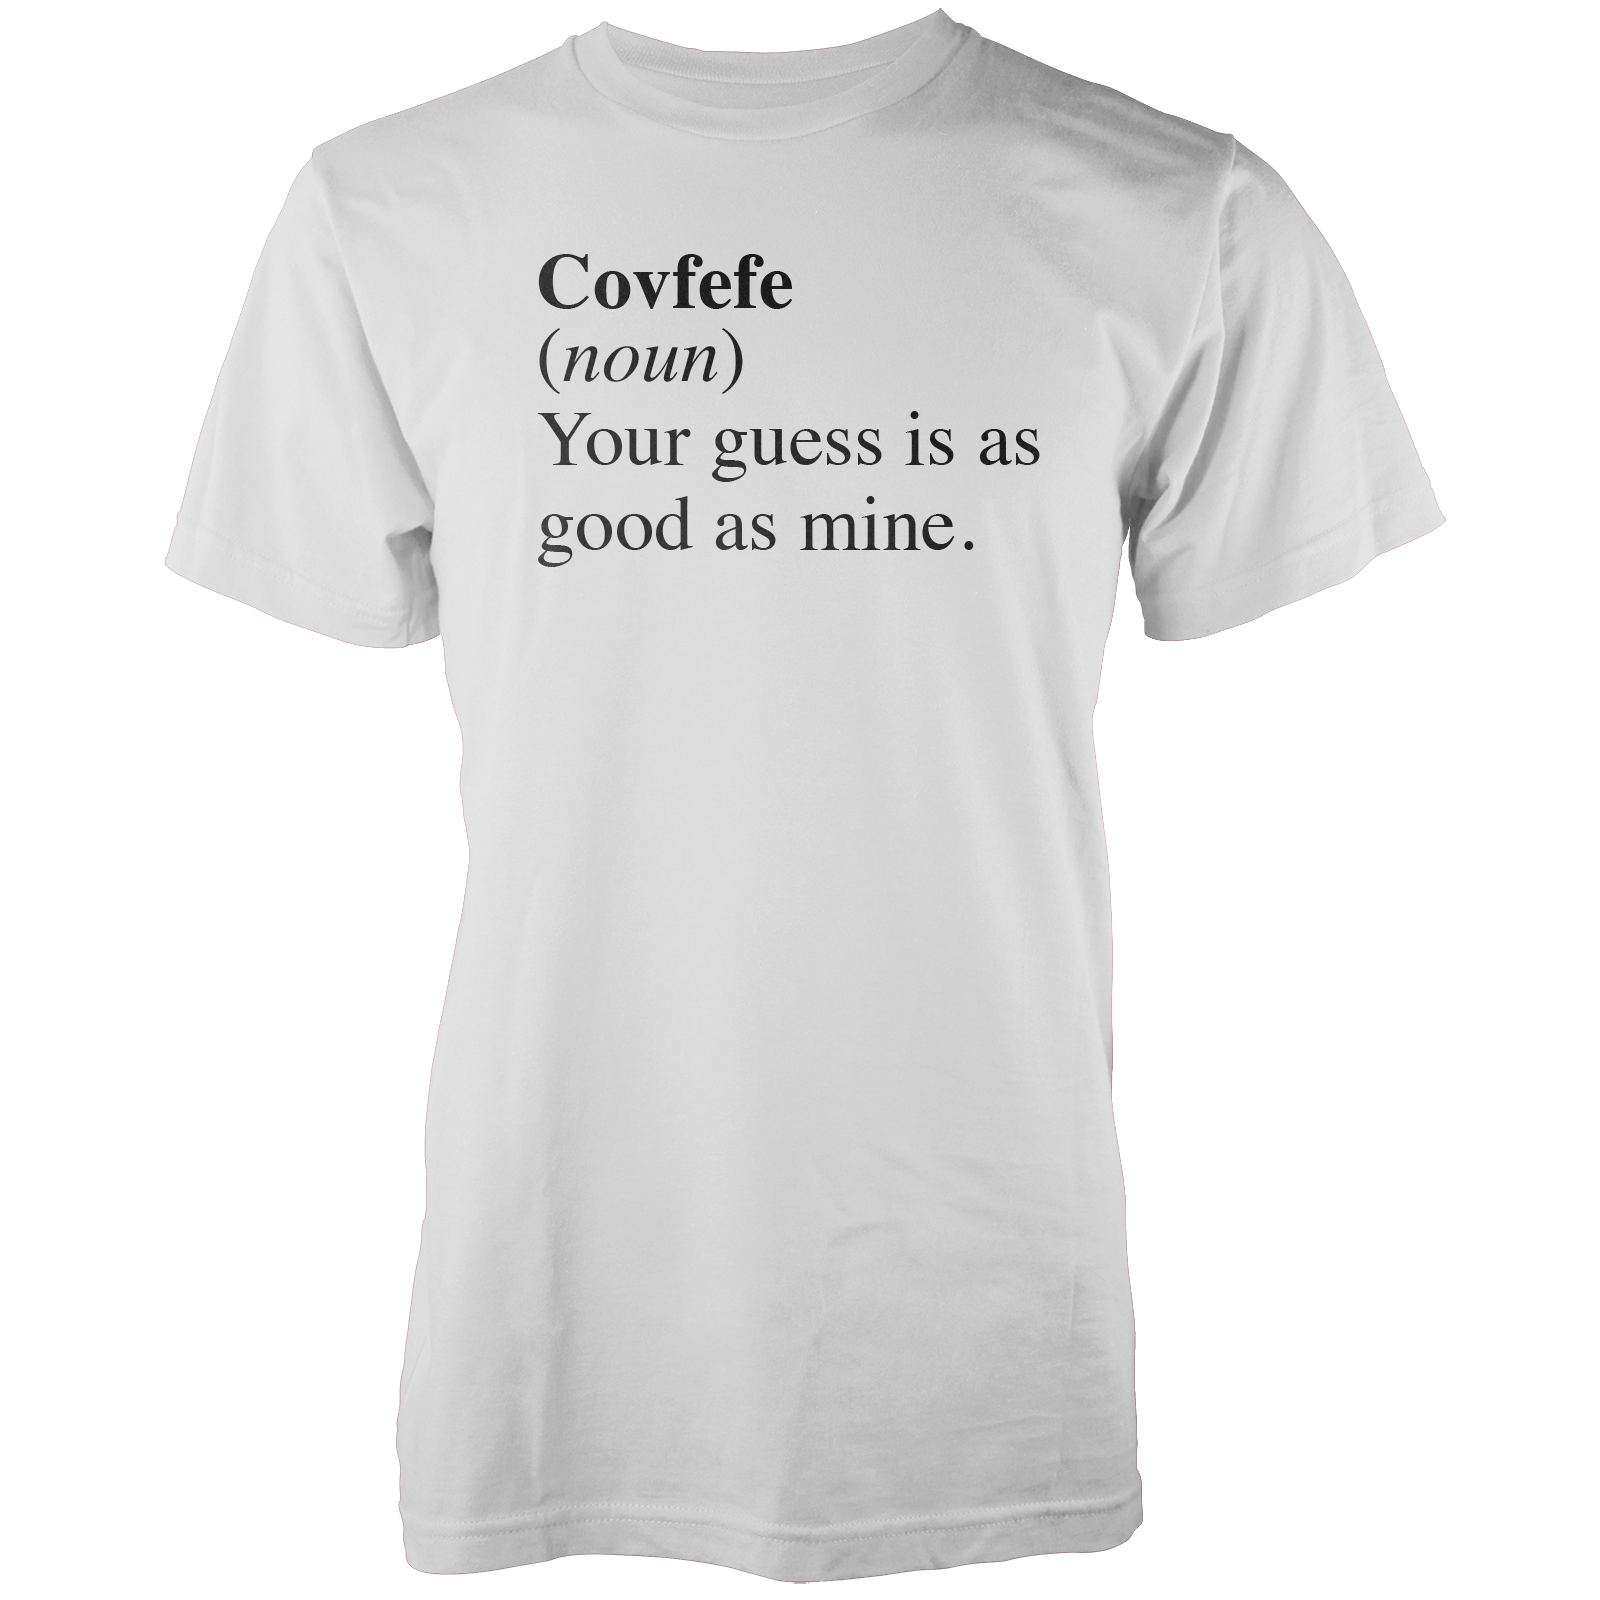 Covfefe Noun Men's White T-Shirt - S - White